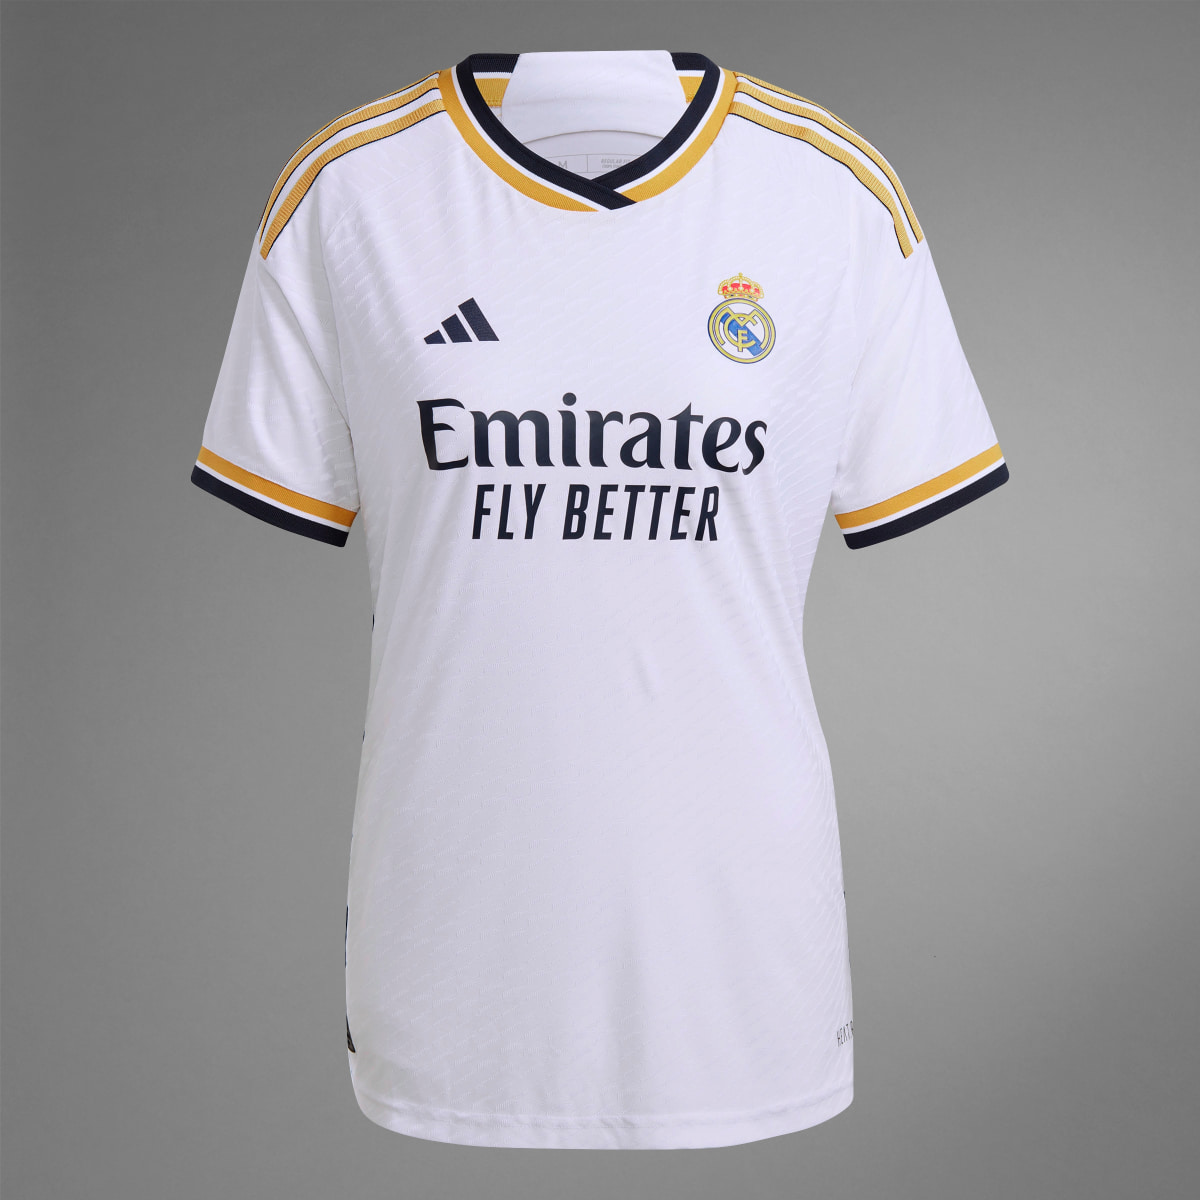 Adidas Camisola Principal Oficial 23/24 do Real Madrid. 11